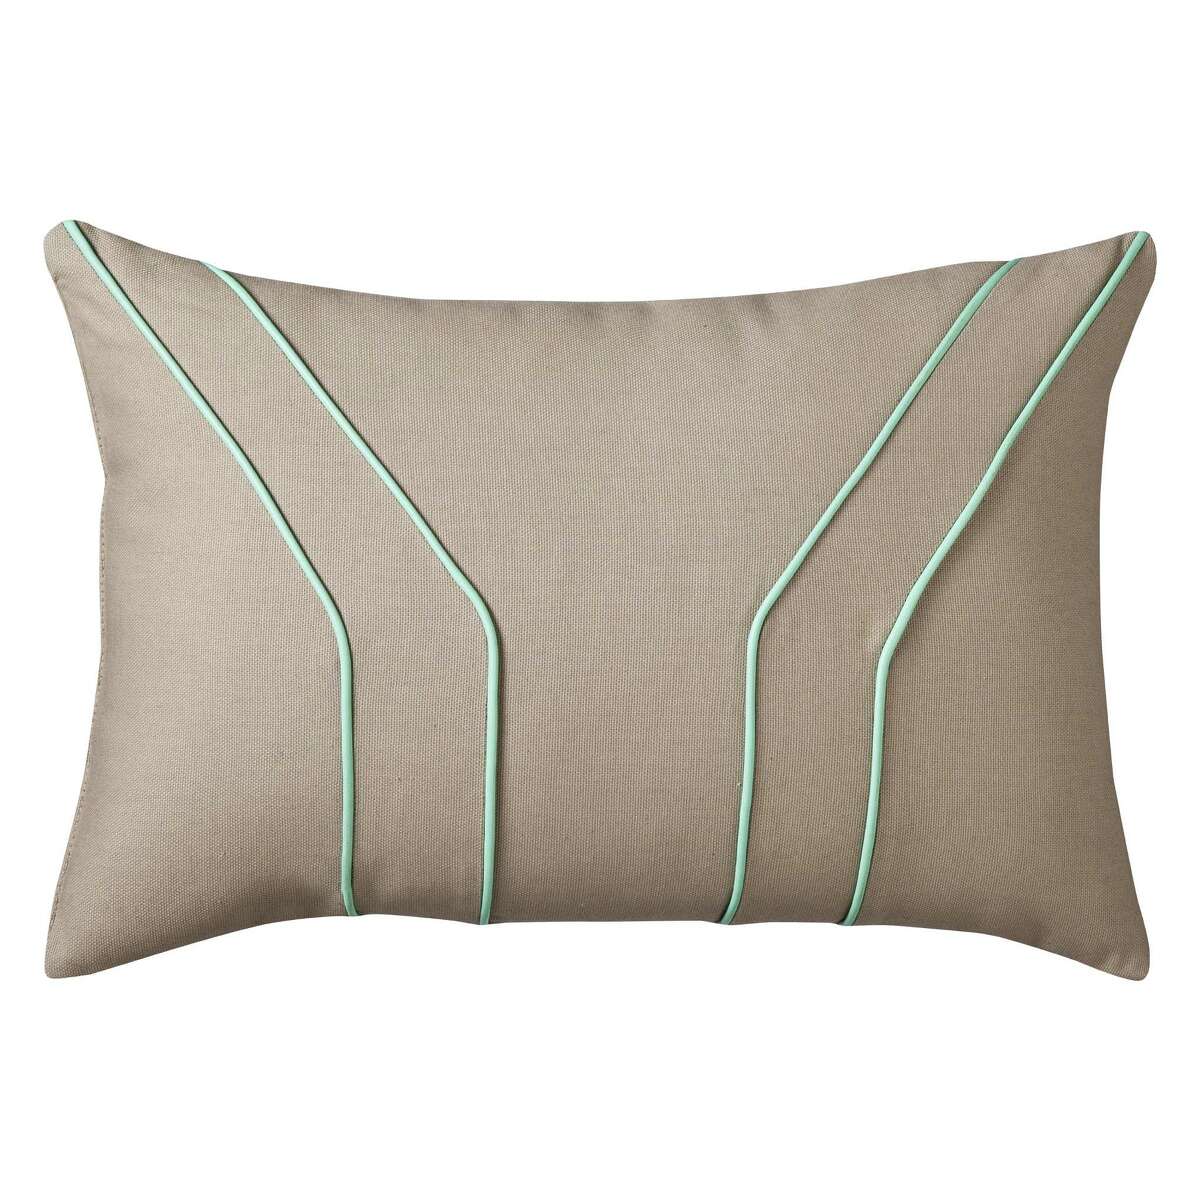 Nate Berkus Collection Piping pillow in tan, $24.99 at Target Target.com - January 2013